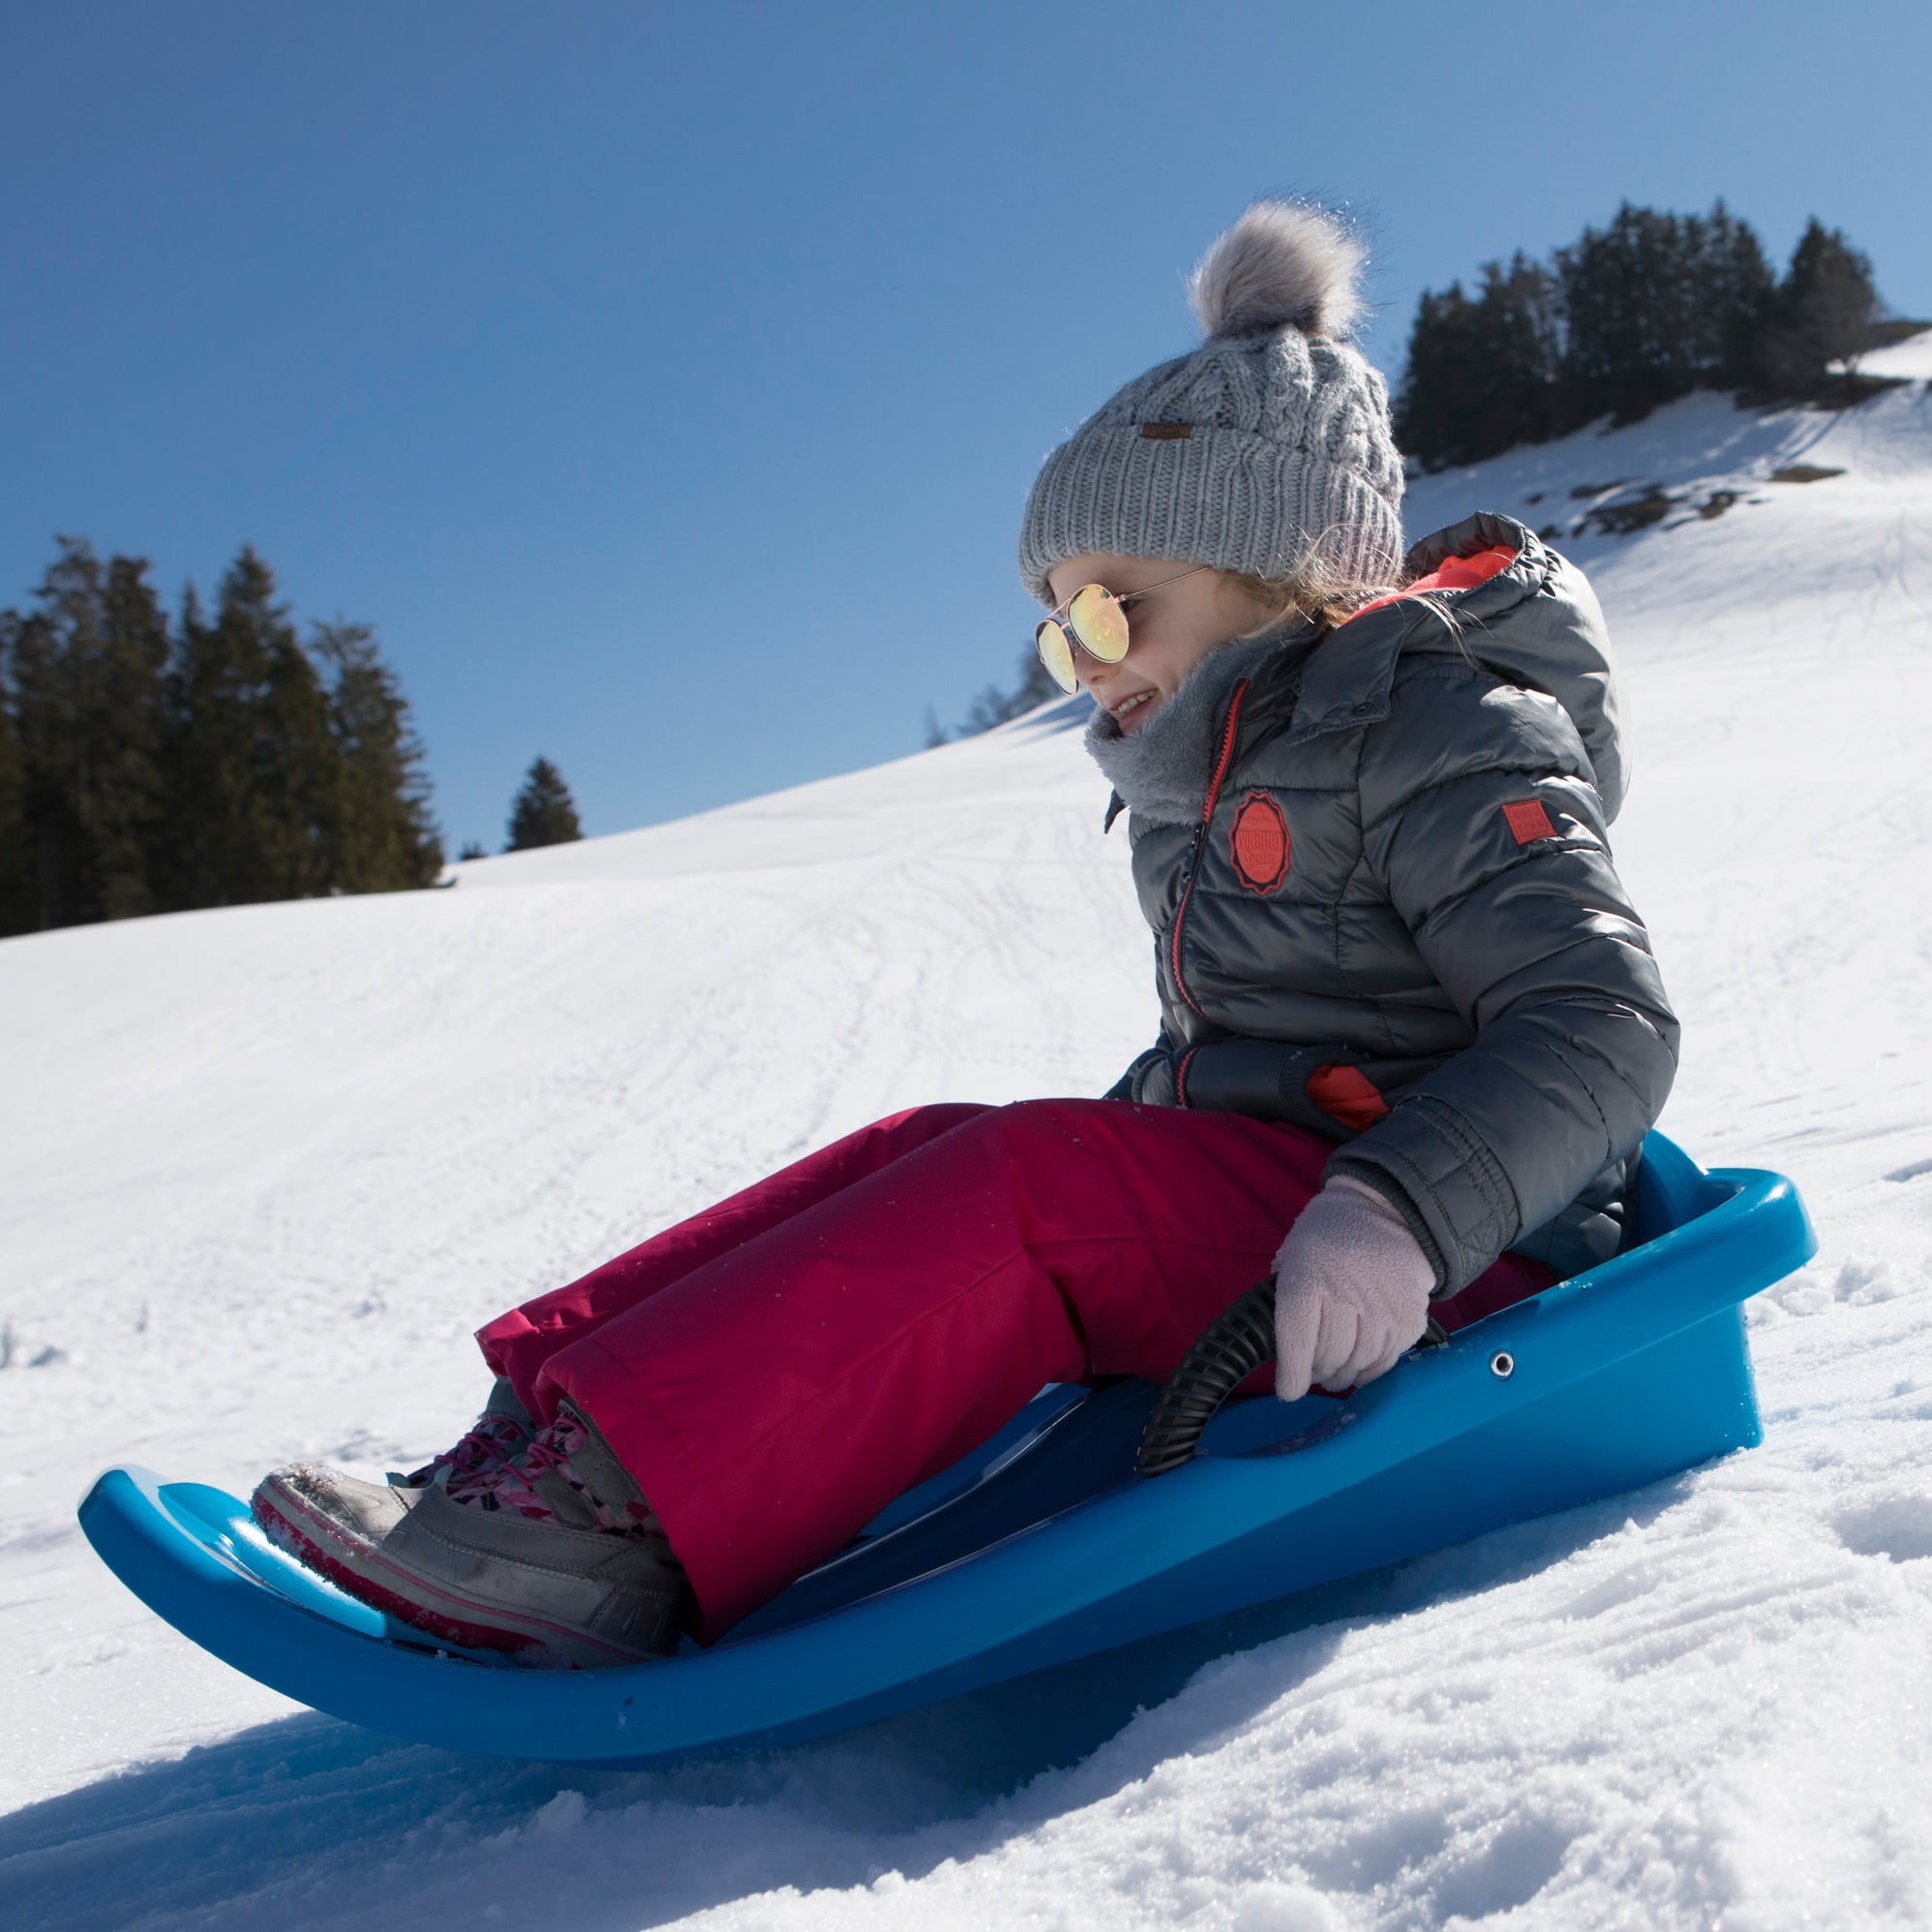 Child sledding on snow